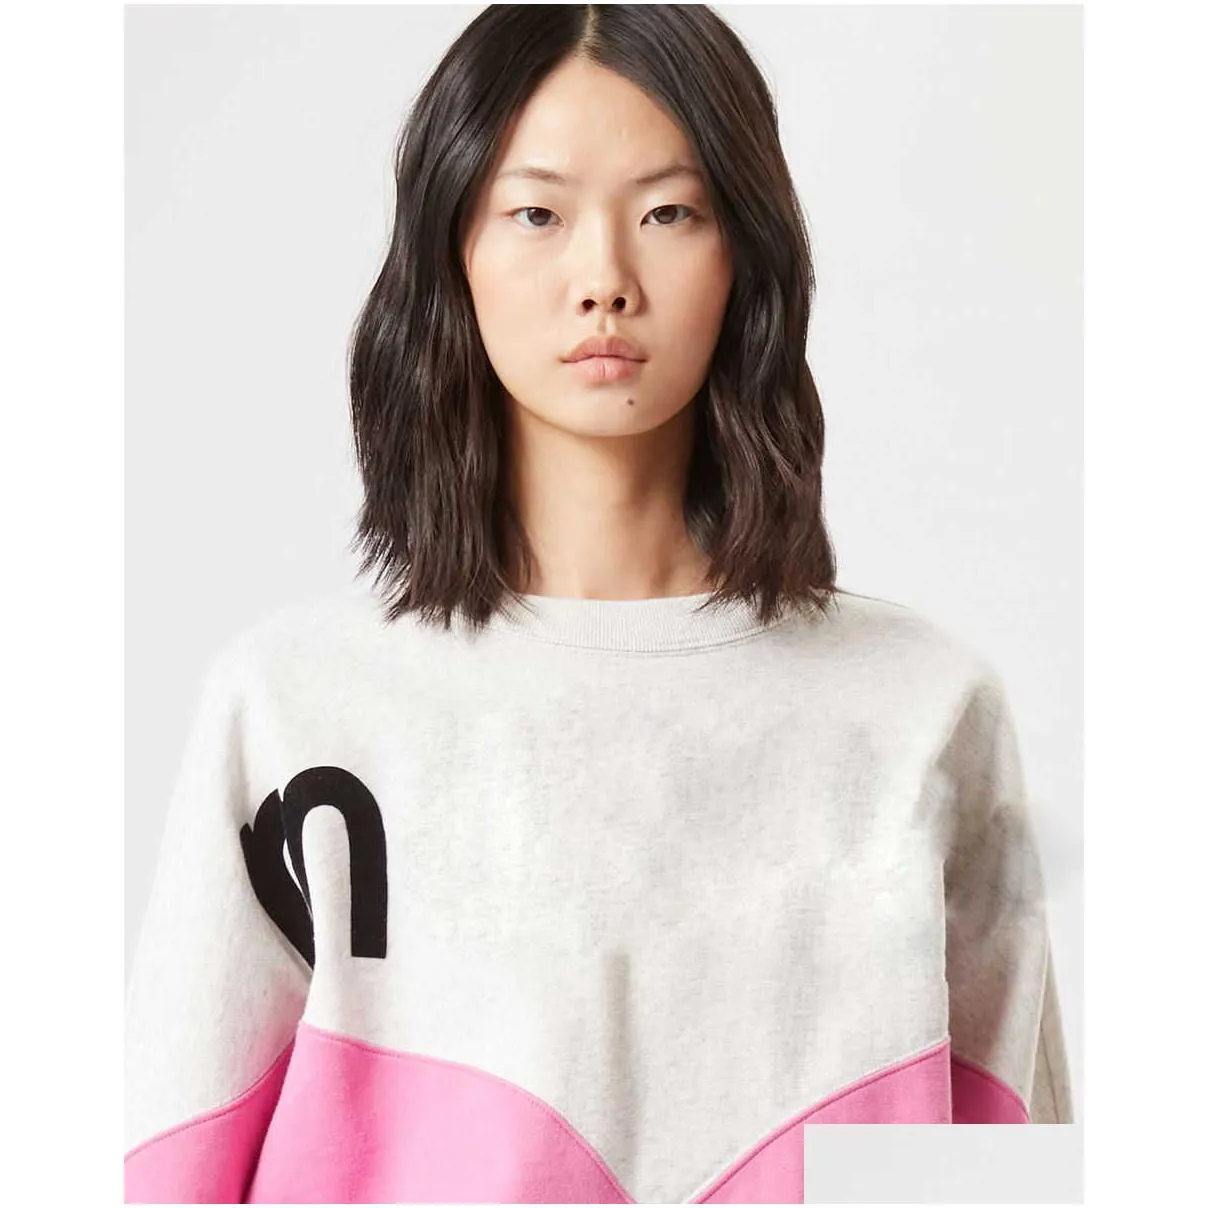 Sweatshirt Designer ISABELS MARANTS Round Neck Pullover Women Sweater Letter Flocking Print Casual Hoodies